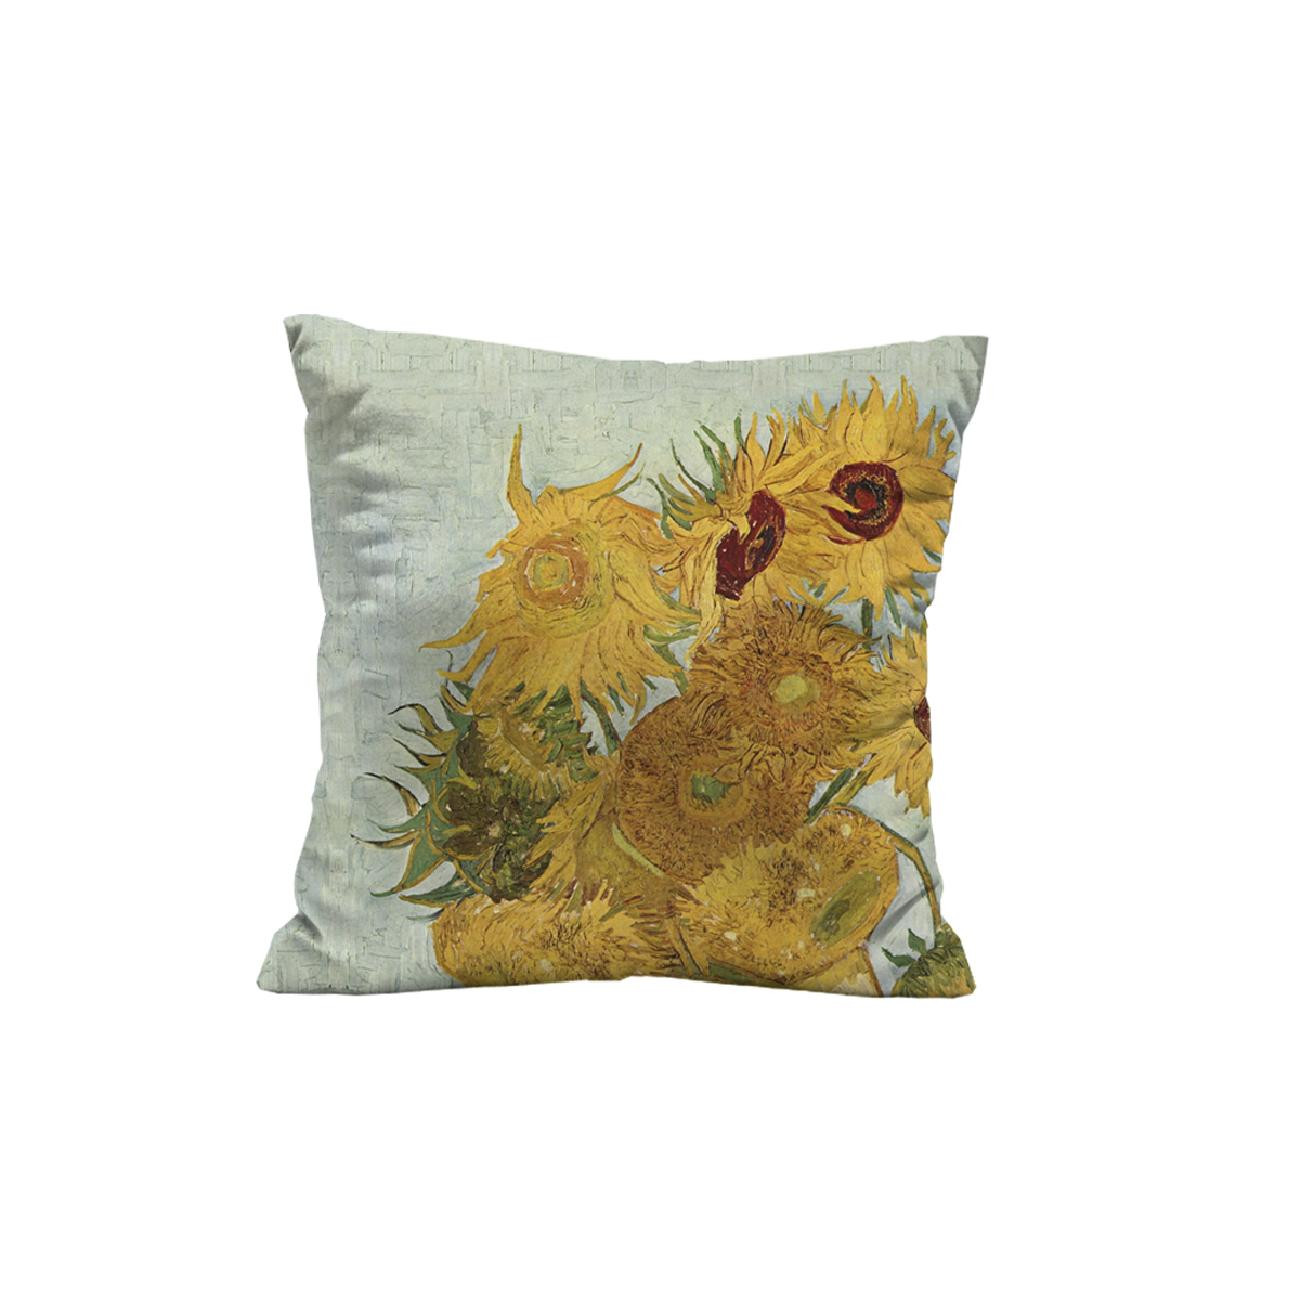 PILLOW 45X45 - SUNFLOWERS (Vincent van Gogh) - sewing set